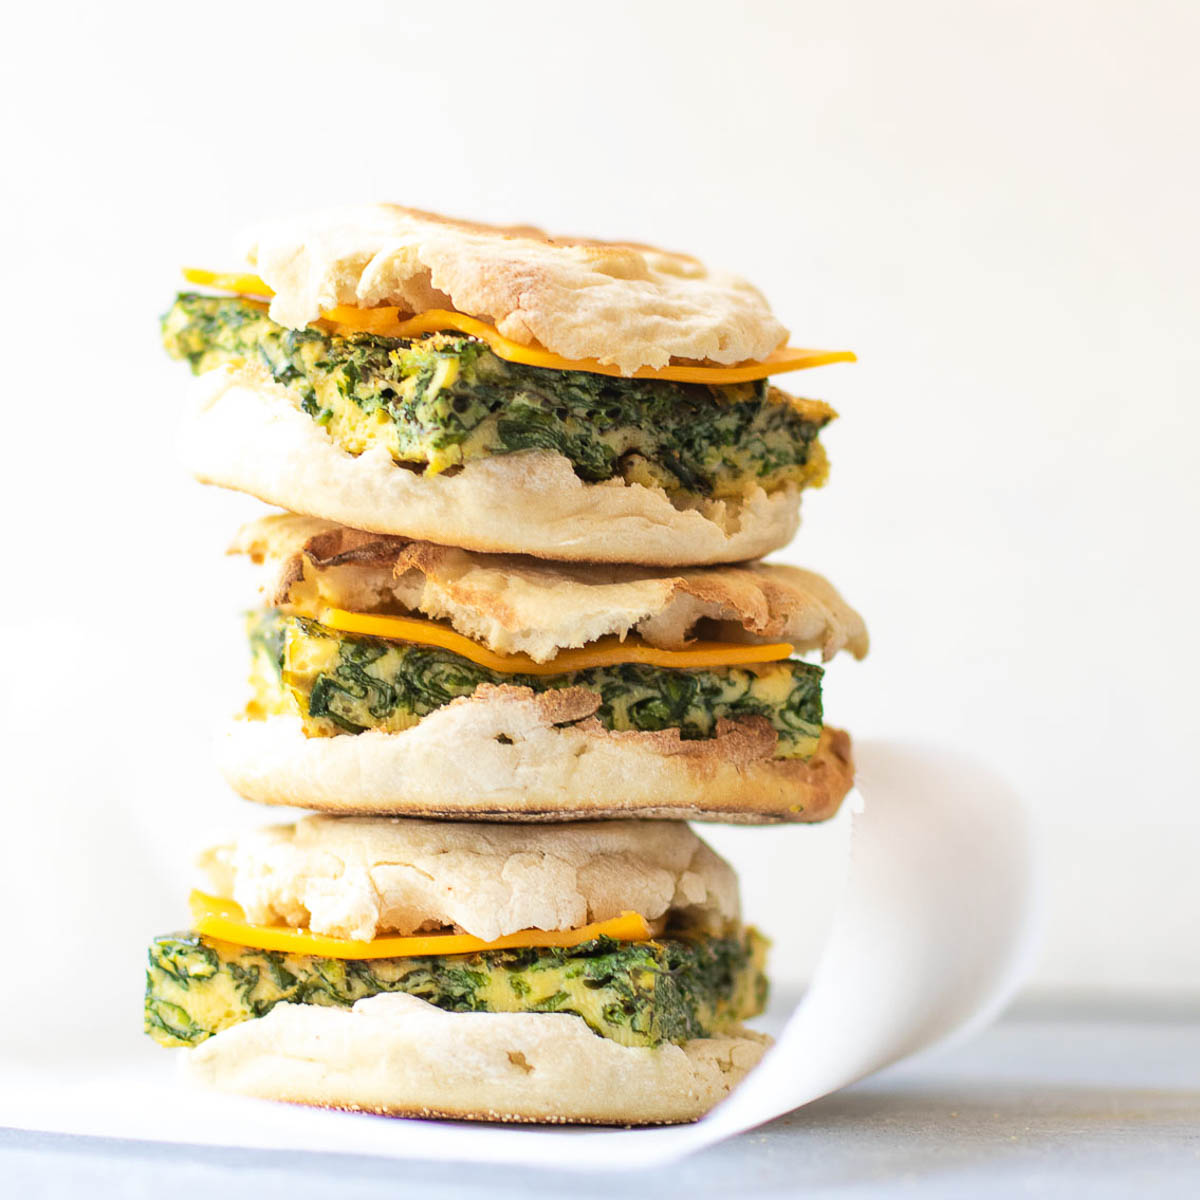 https://marisamoore.com/wp-content/uploads/2023/03/Spinach-Breakfast-Sandwich-Freezer-Friendly.jpg